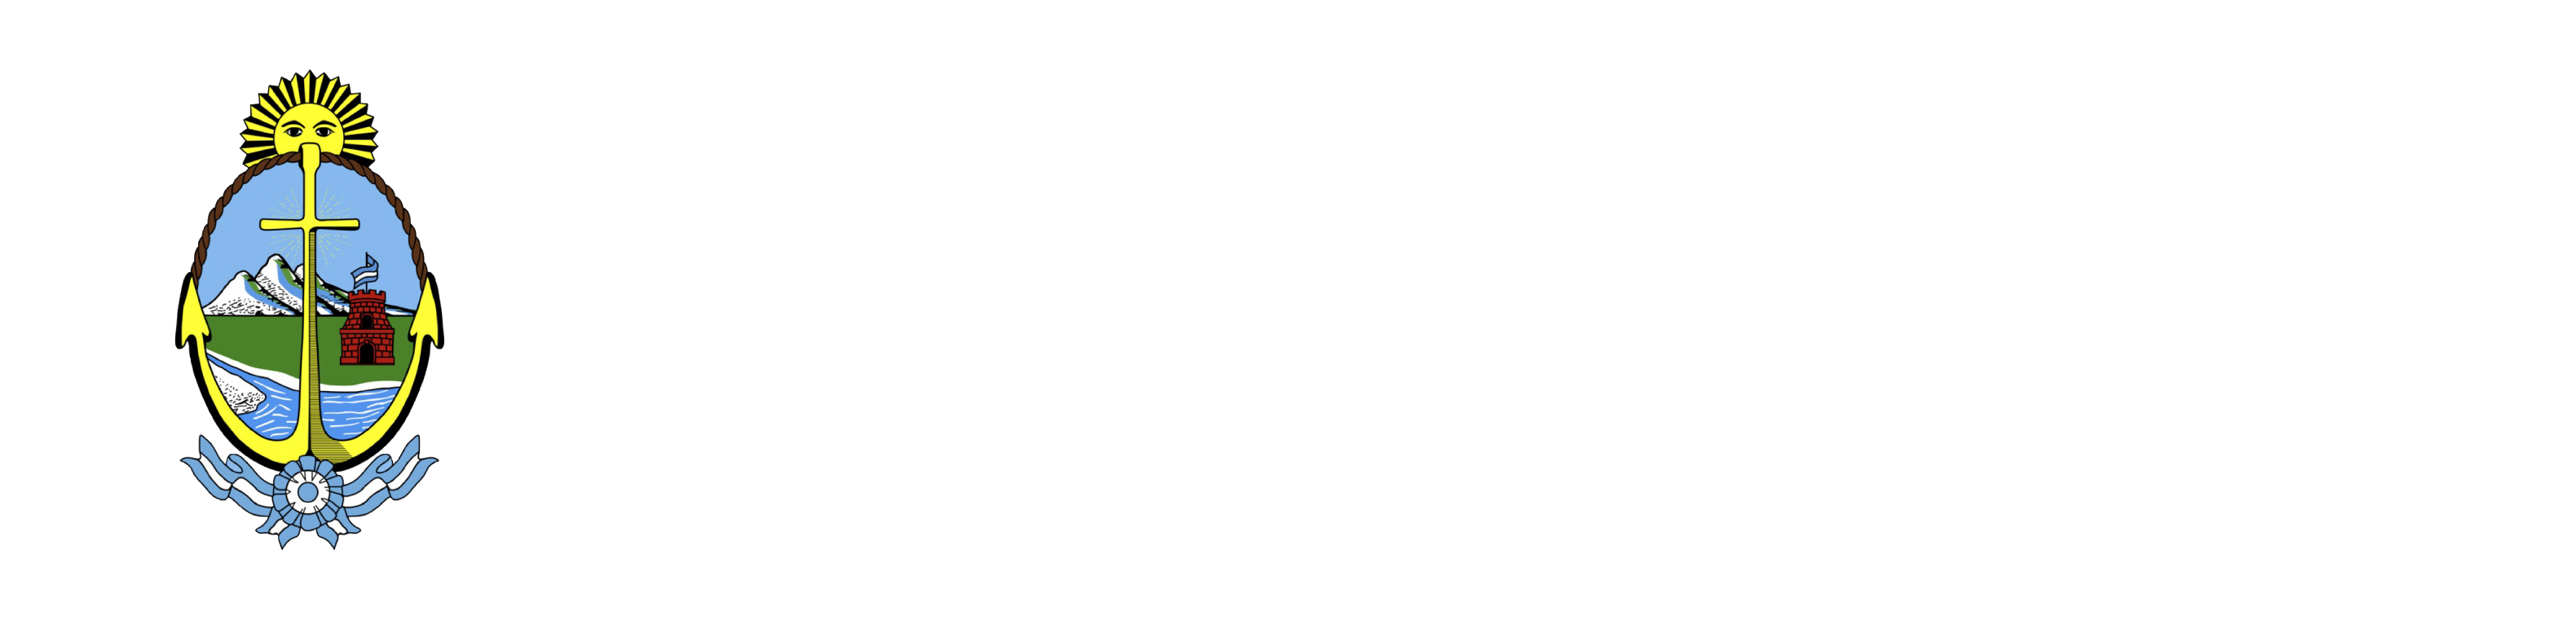 Municipio de Bahía Blanca (Buenos Aires, Argentina)